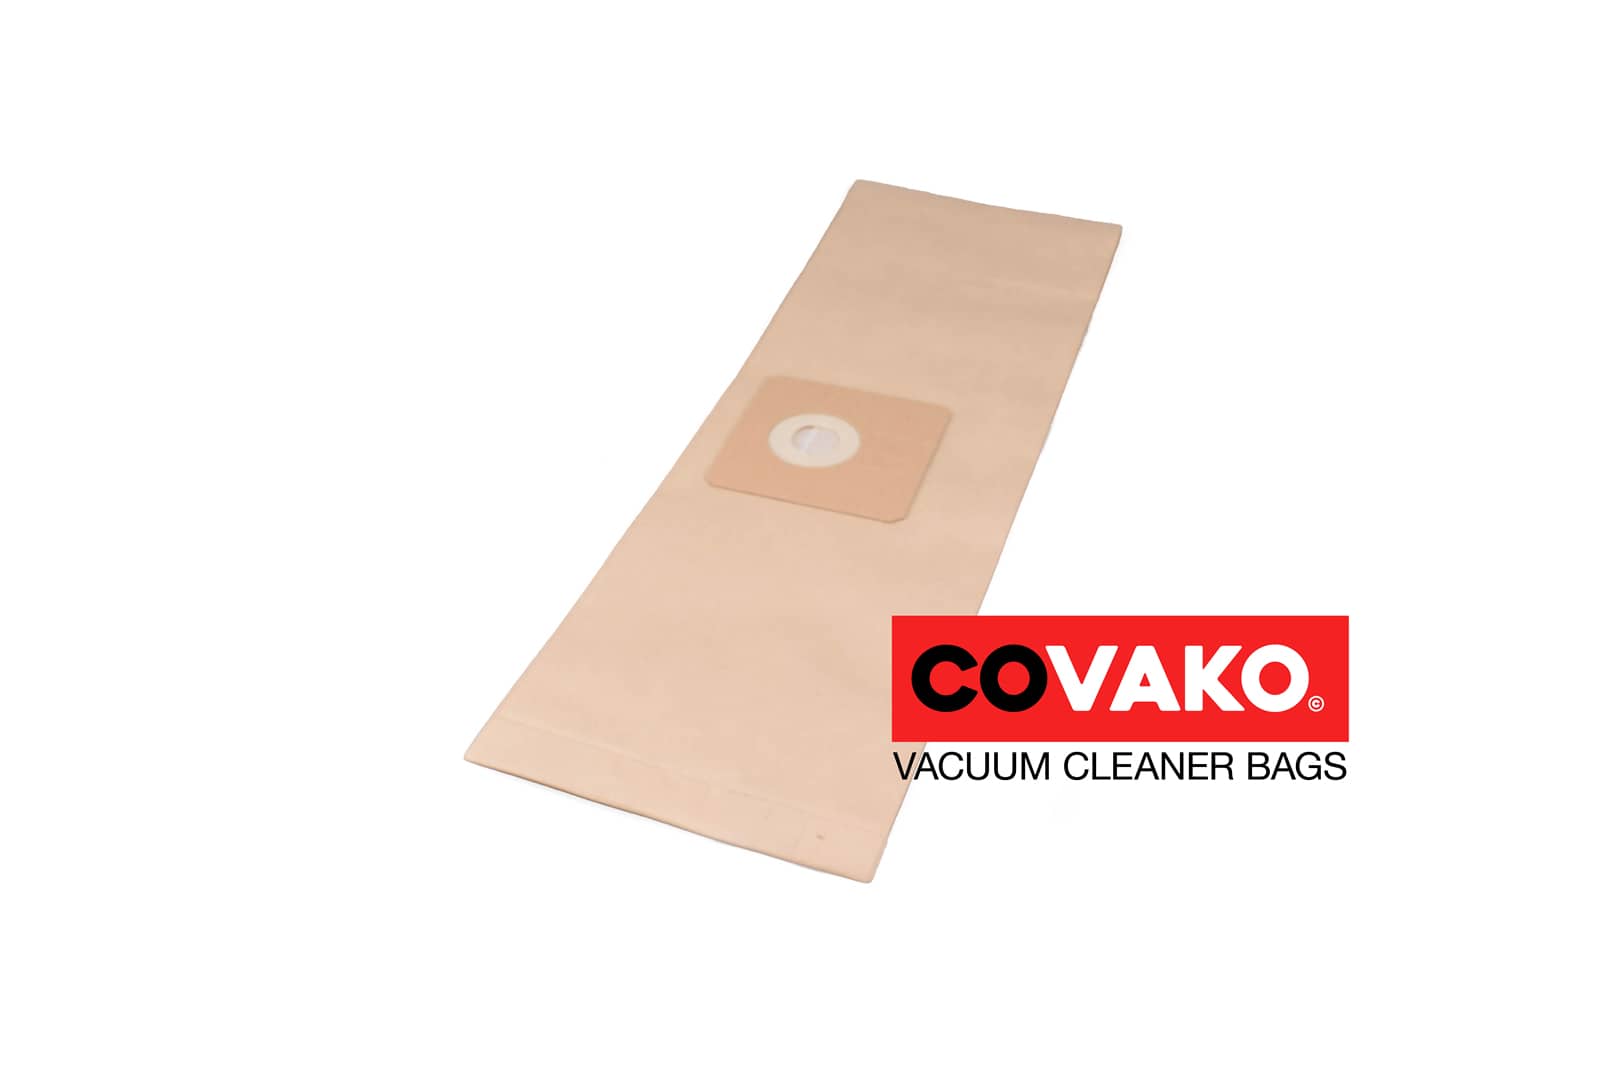 TMB Piccollo Silenzio  / Paper - TMB vacuum cleaner bags